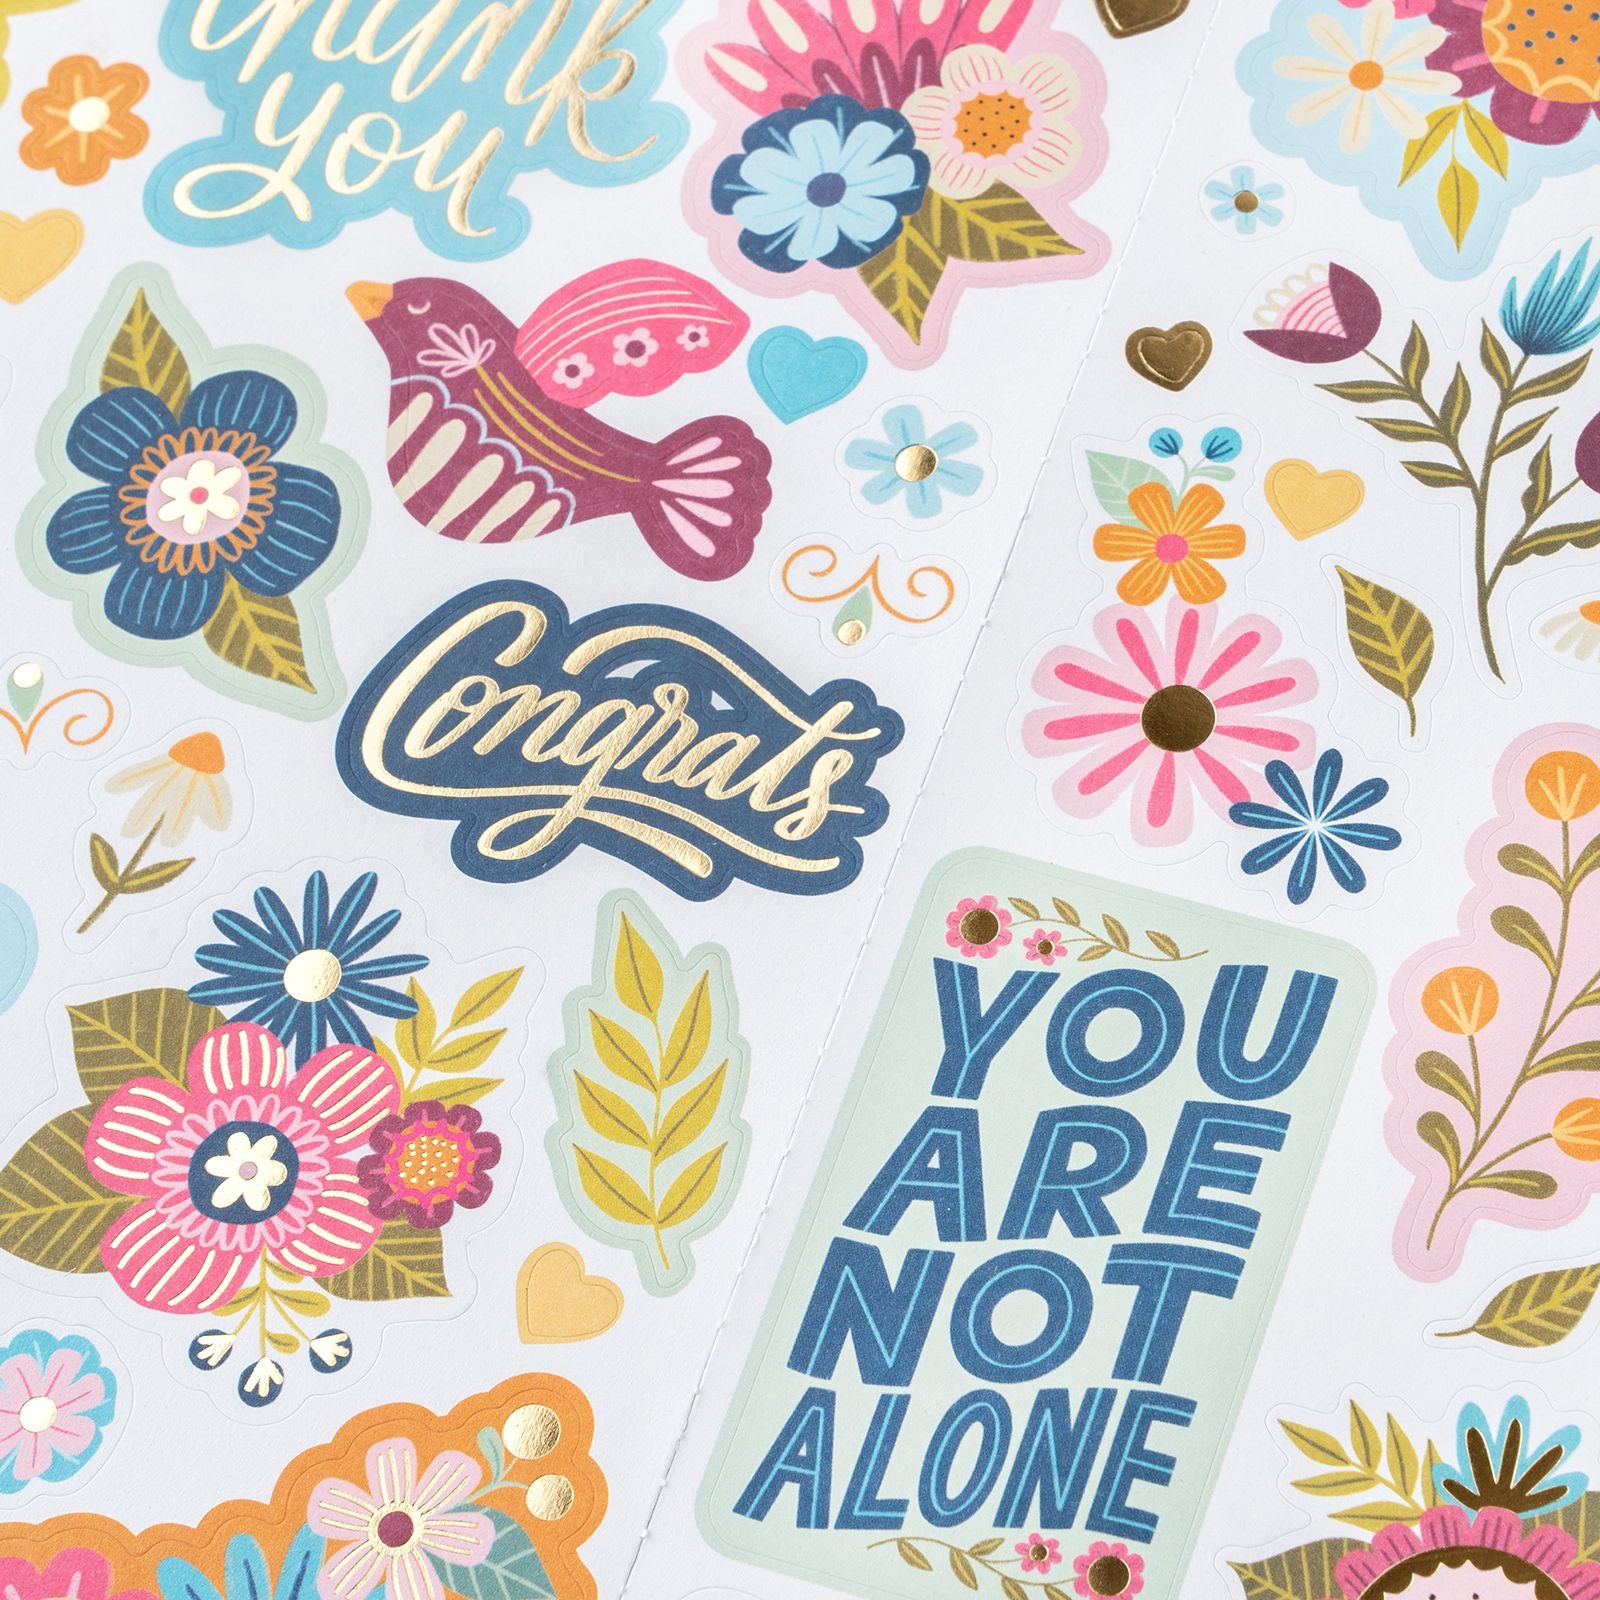 Joyful Notes Stickers / Estampas Decorativas con Foil